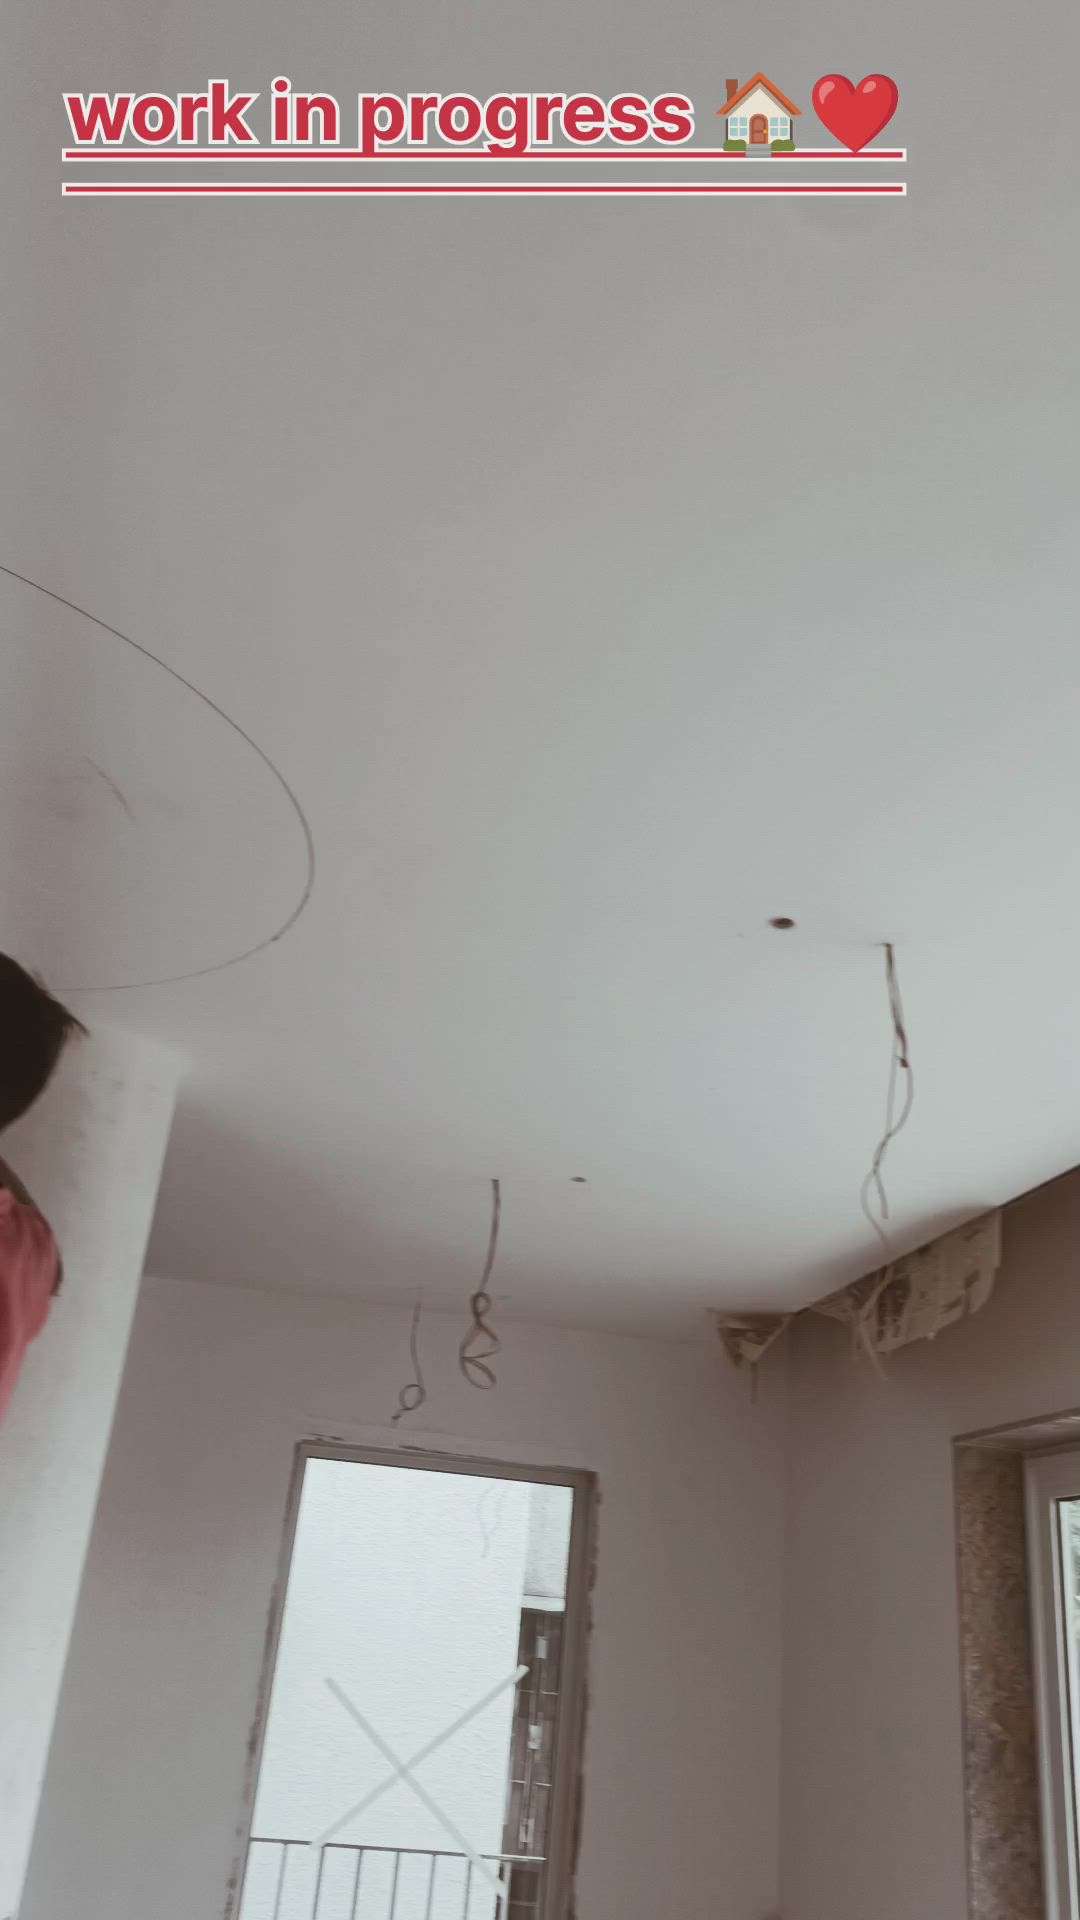 work in progress indore site 🏠
for false ceiling contact us 7999309033
#CeilingFan #FalseCeiling #popceiling #popcontractor #Contractor #kolohindi #koloviral #kolopost #indorehouse